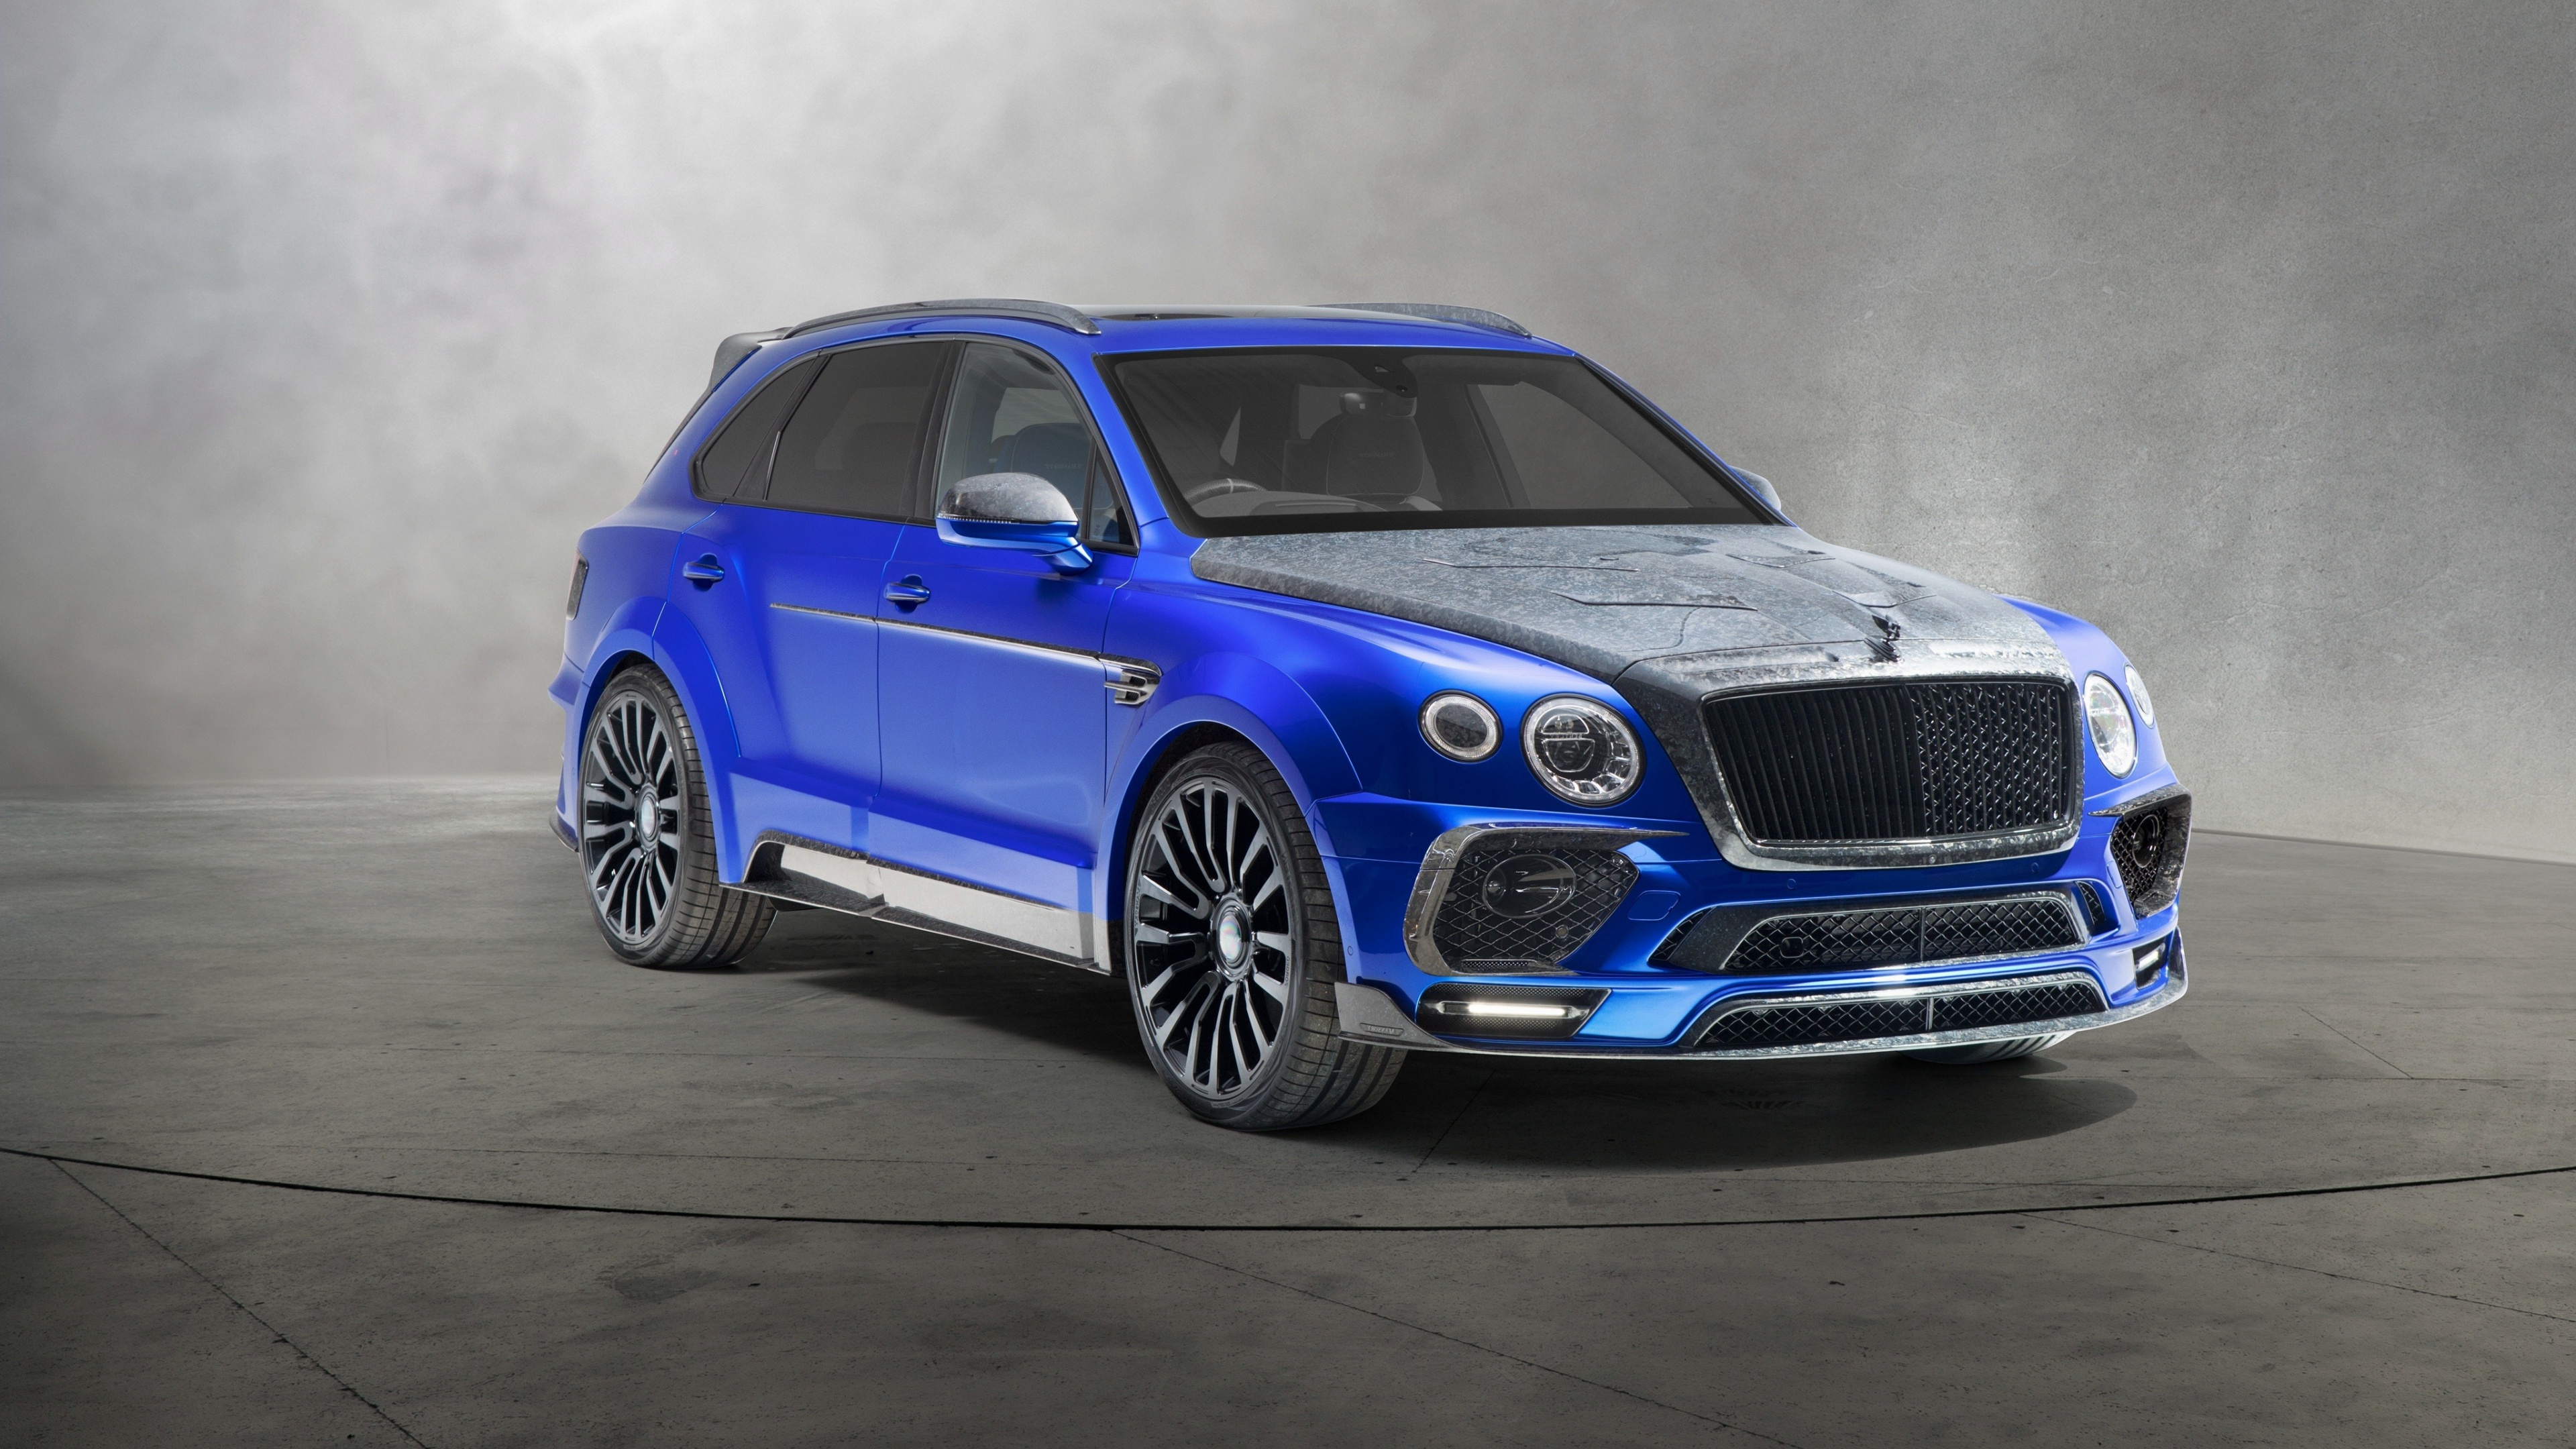 Bentley Bentayga, Blue compact SUV, 4k wallpaper, High-quality image, 3840x2160 4K Desktop